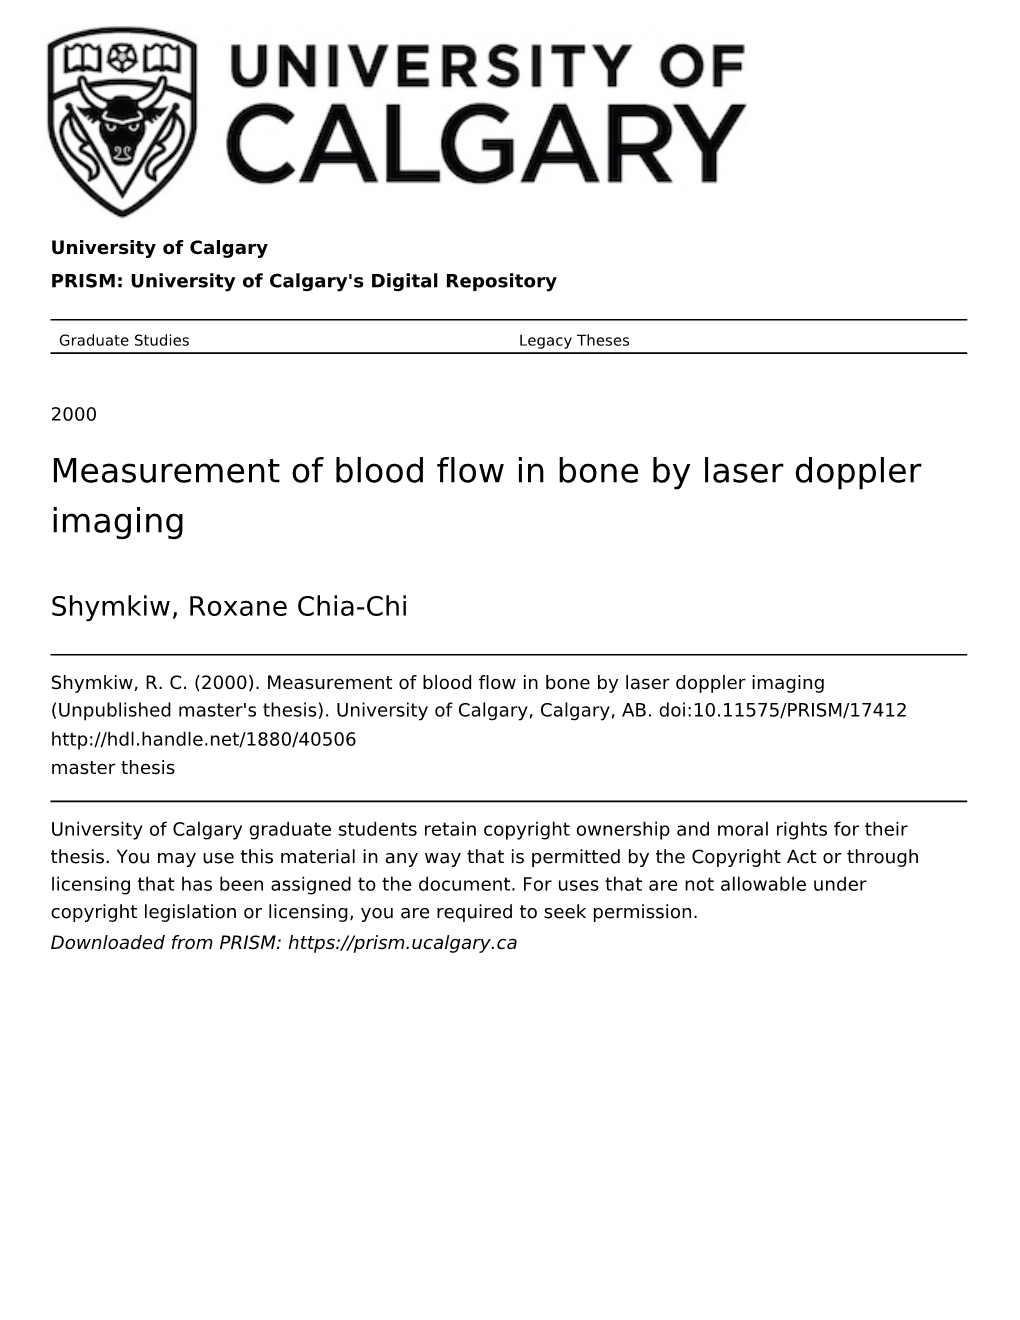 Measurement of Blood Flow in Bone by Laser Doppler Imaging